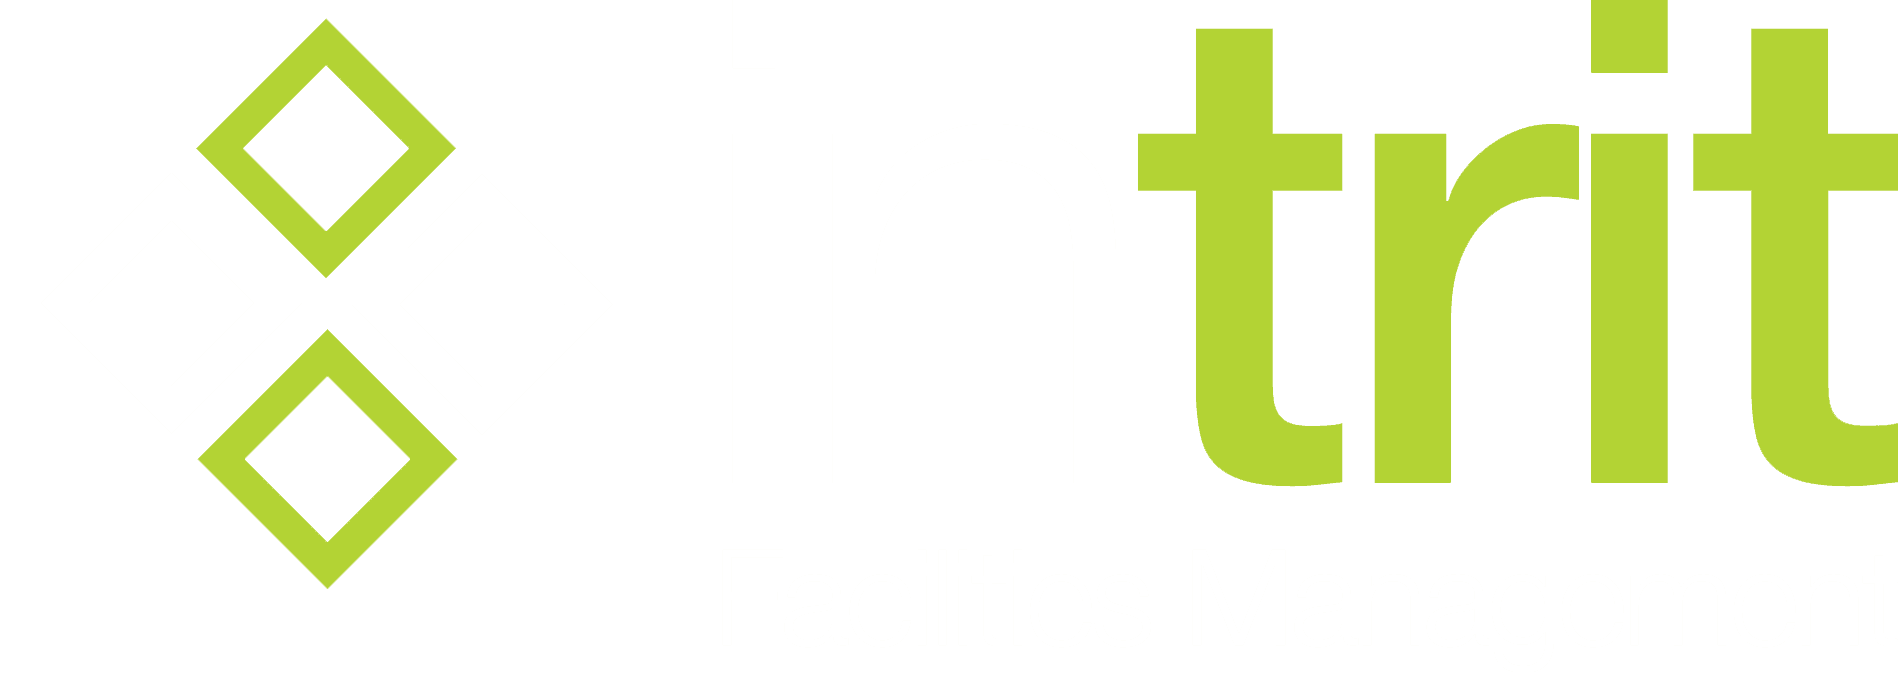 intrit Facilities Management logo